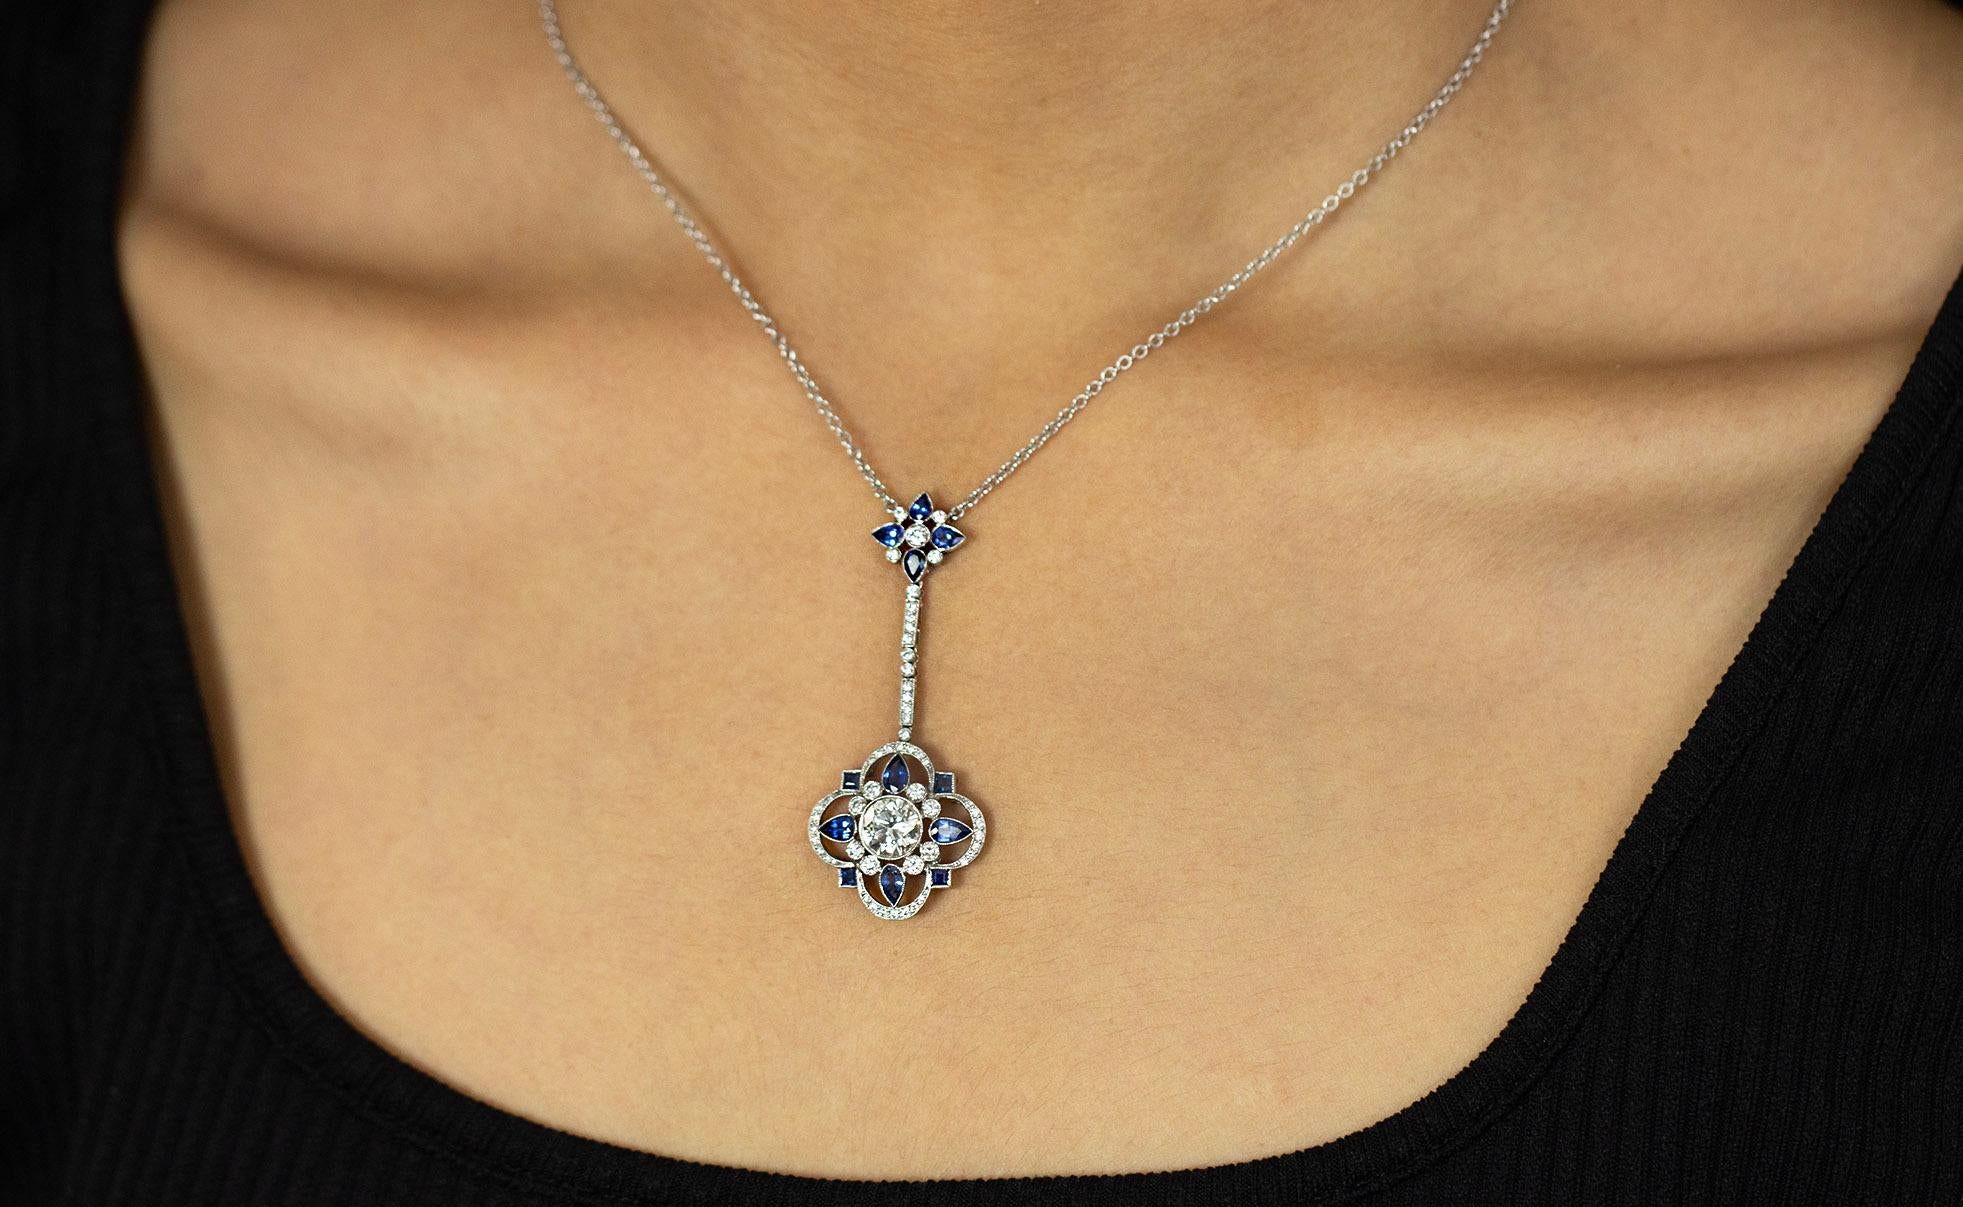 Women's Vintage 3.50 Carats Total Mixed Cut Blue Sapphire and Diamond Pendant Necklace For Sale